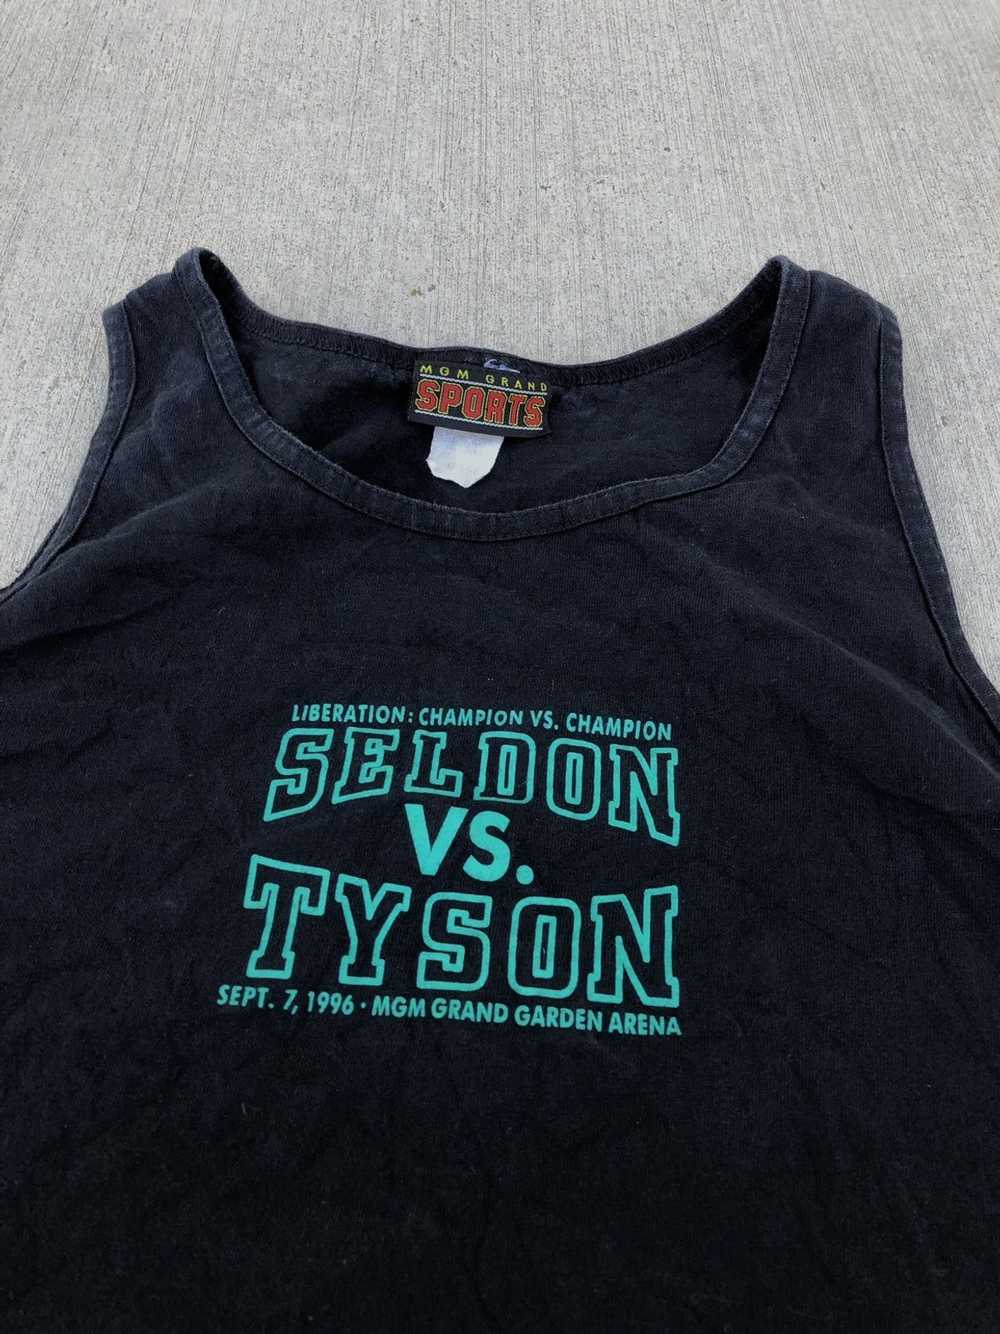 Vintage Vintage mike Tyson boxing shirt - image 4